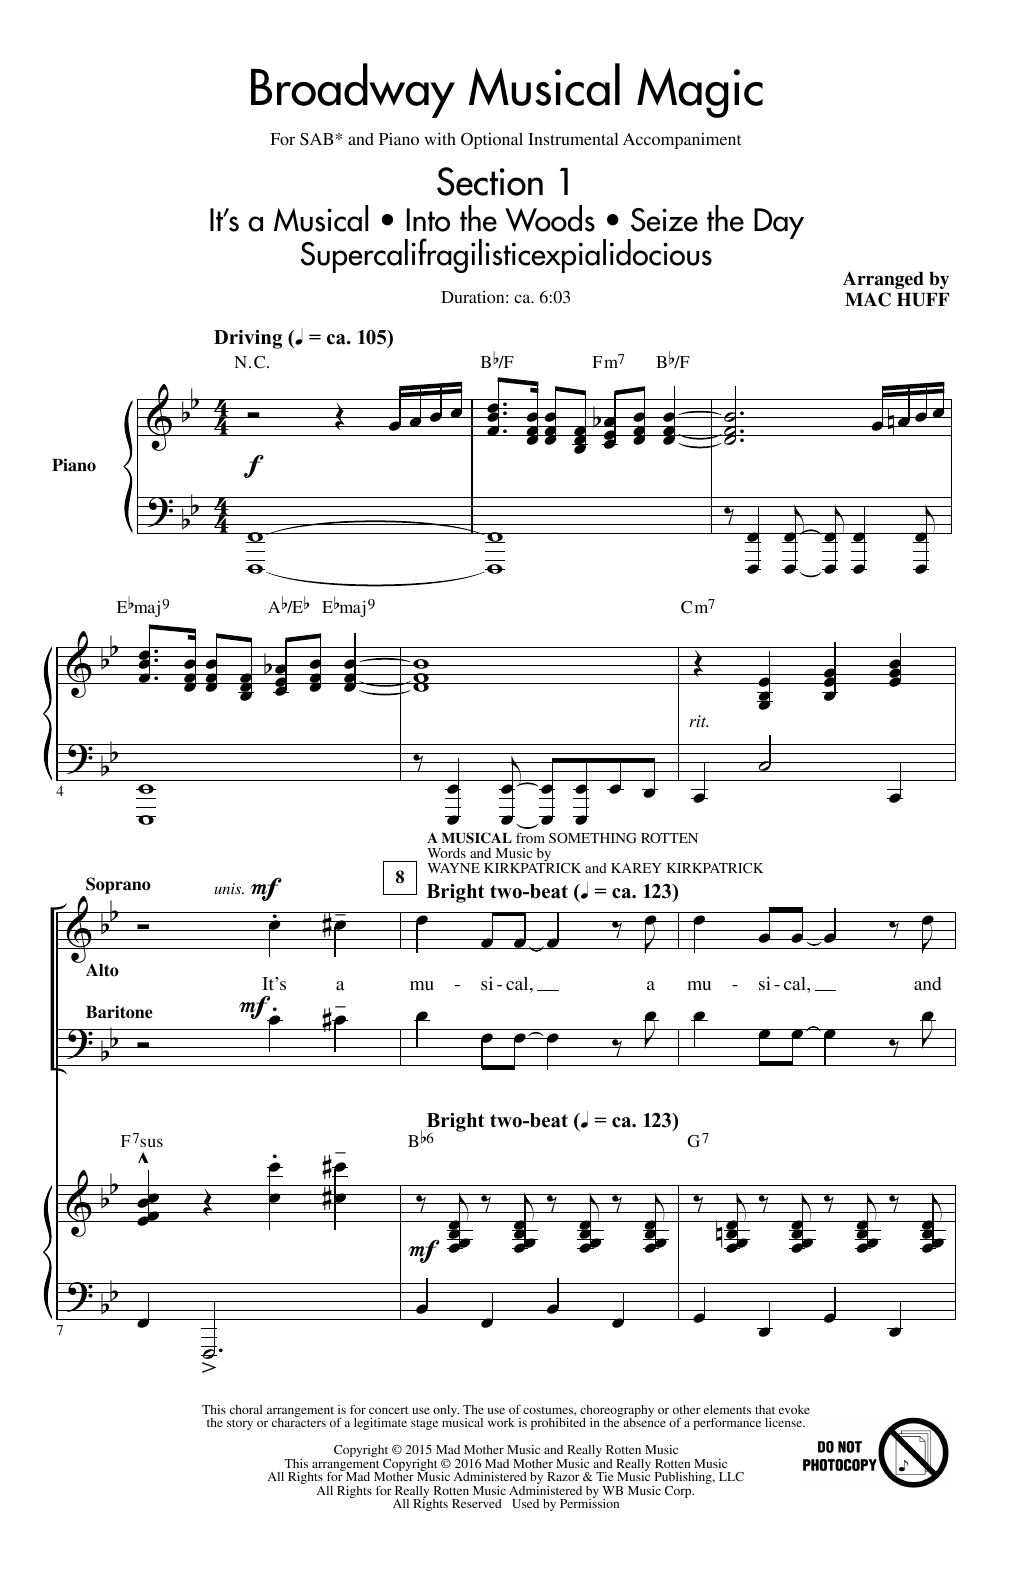 Mac Huff Broadway Musical Magic Sheet Music Notes & Chords for SATB - Download or Print PDF